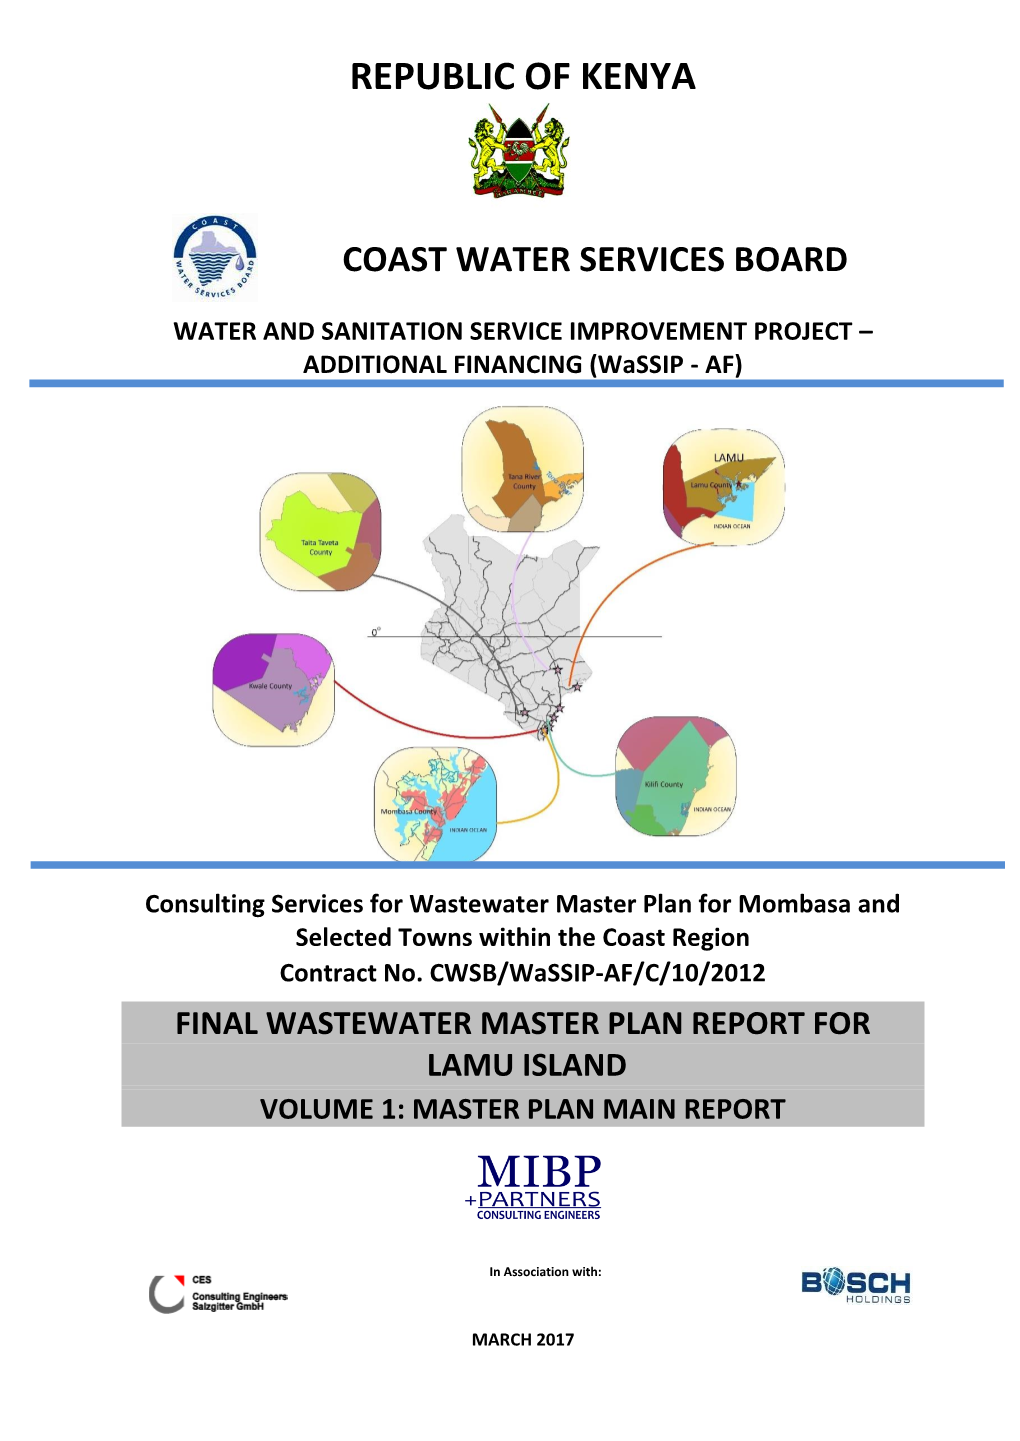 Wastewater Master Plan Report for Lamu Island